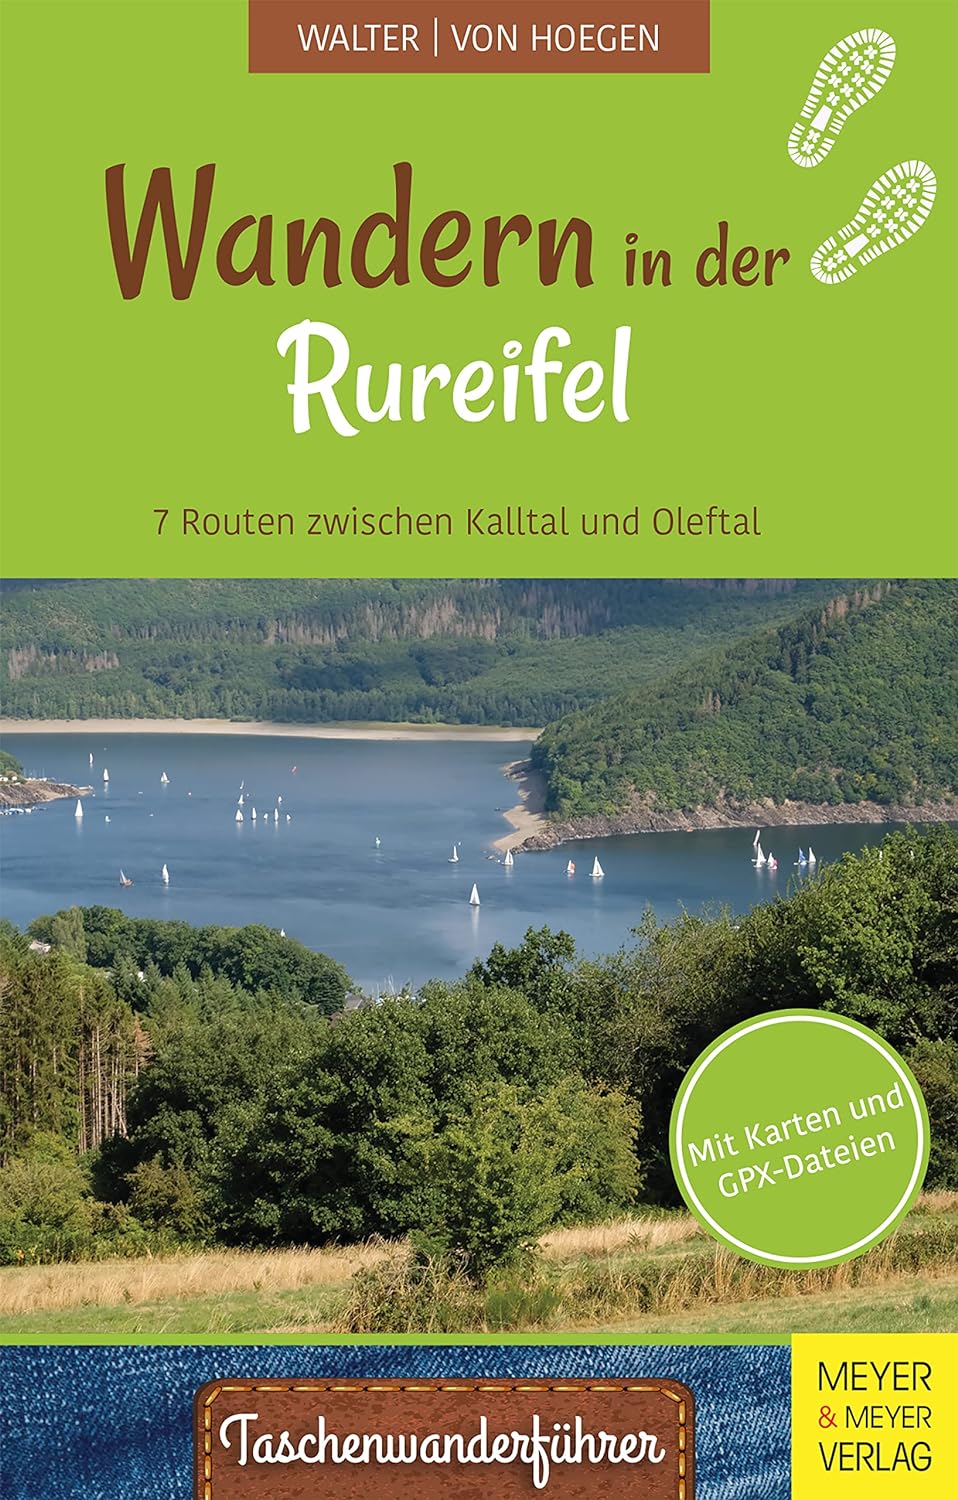 Online bestellen: Wandelgids Wandern in der Rureifel | Meyer & Meyer Sport